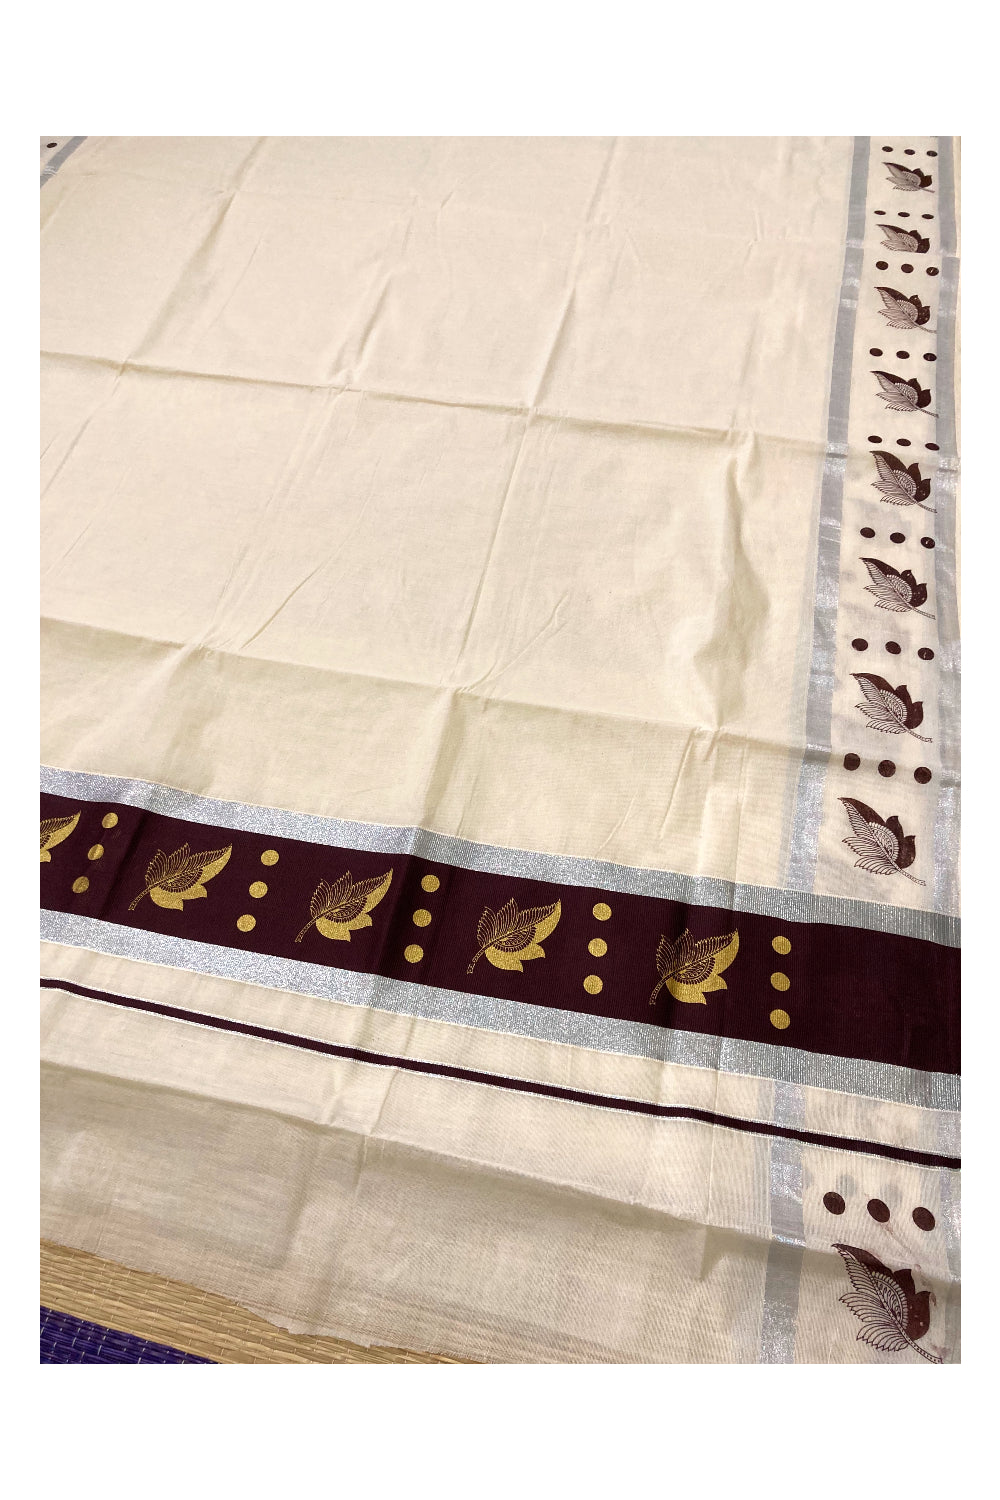 Pure Cotton Kerala Saree with Golden Leaf Block Prints on Silver Kasavu and Dark Brown Pallu